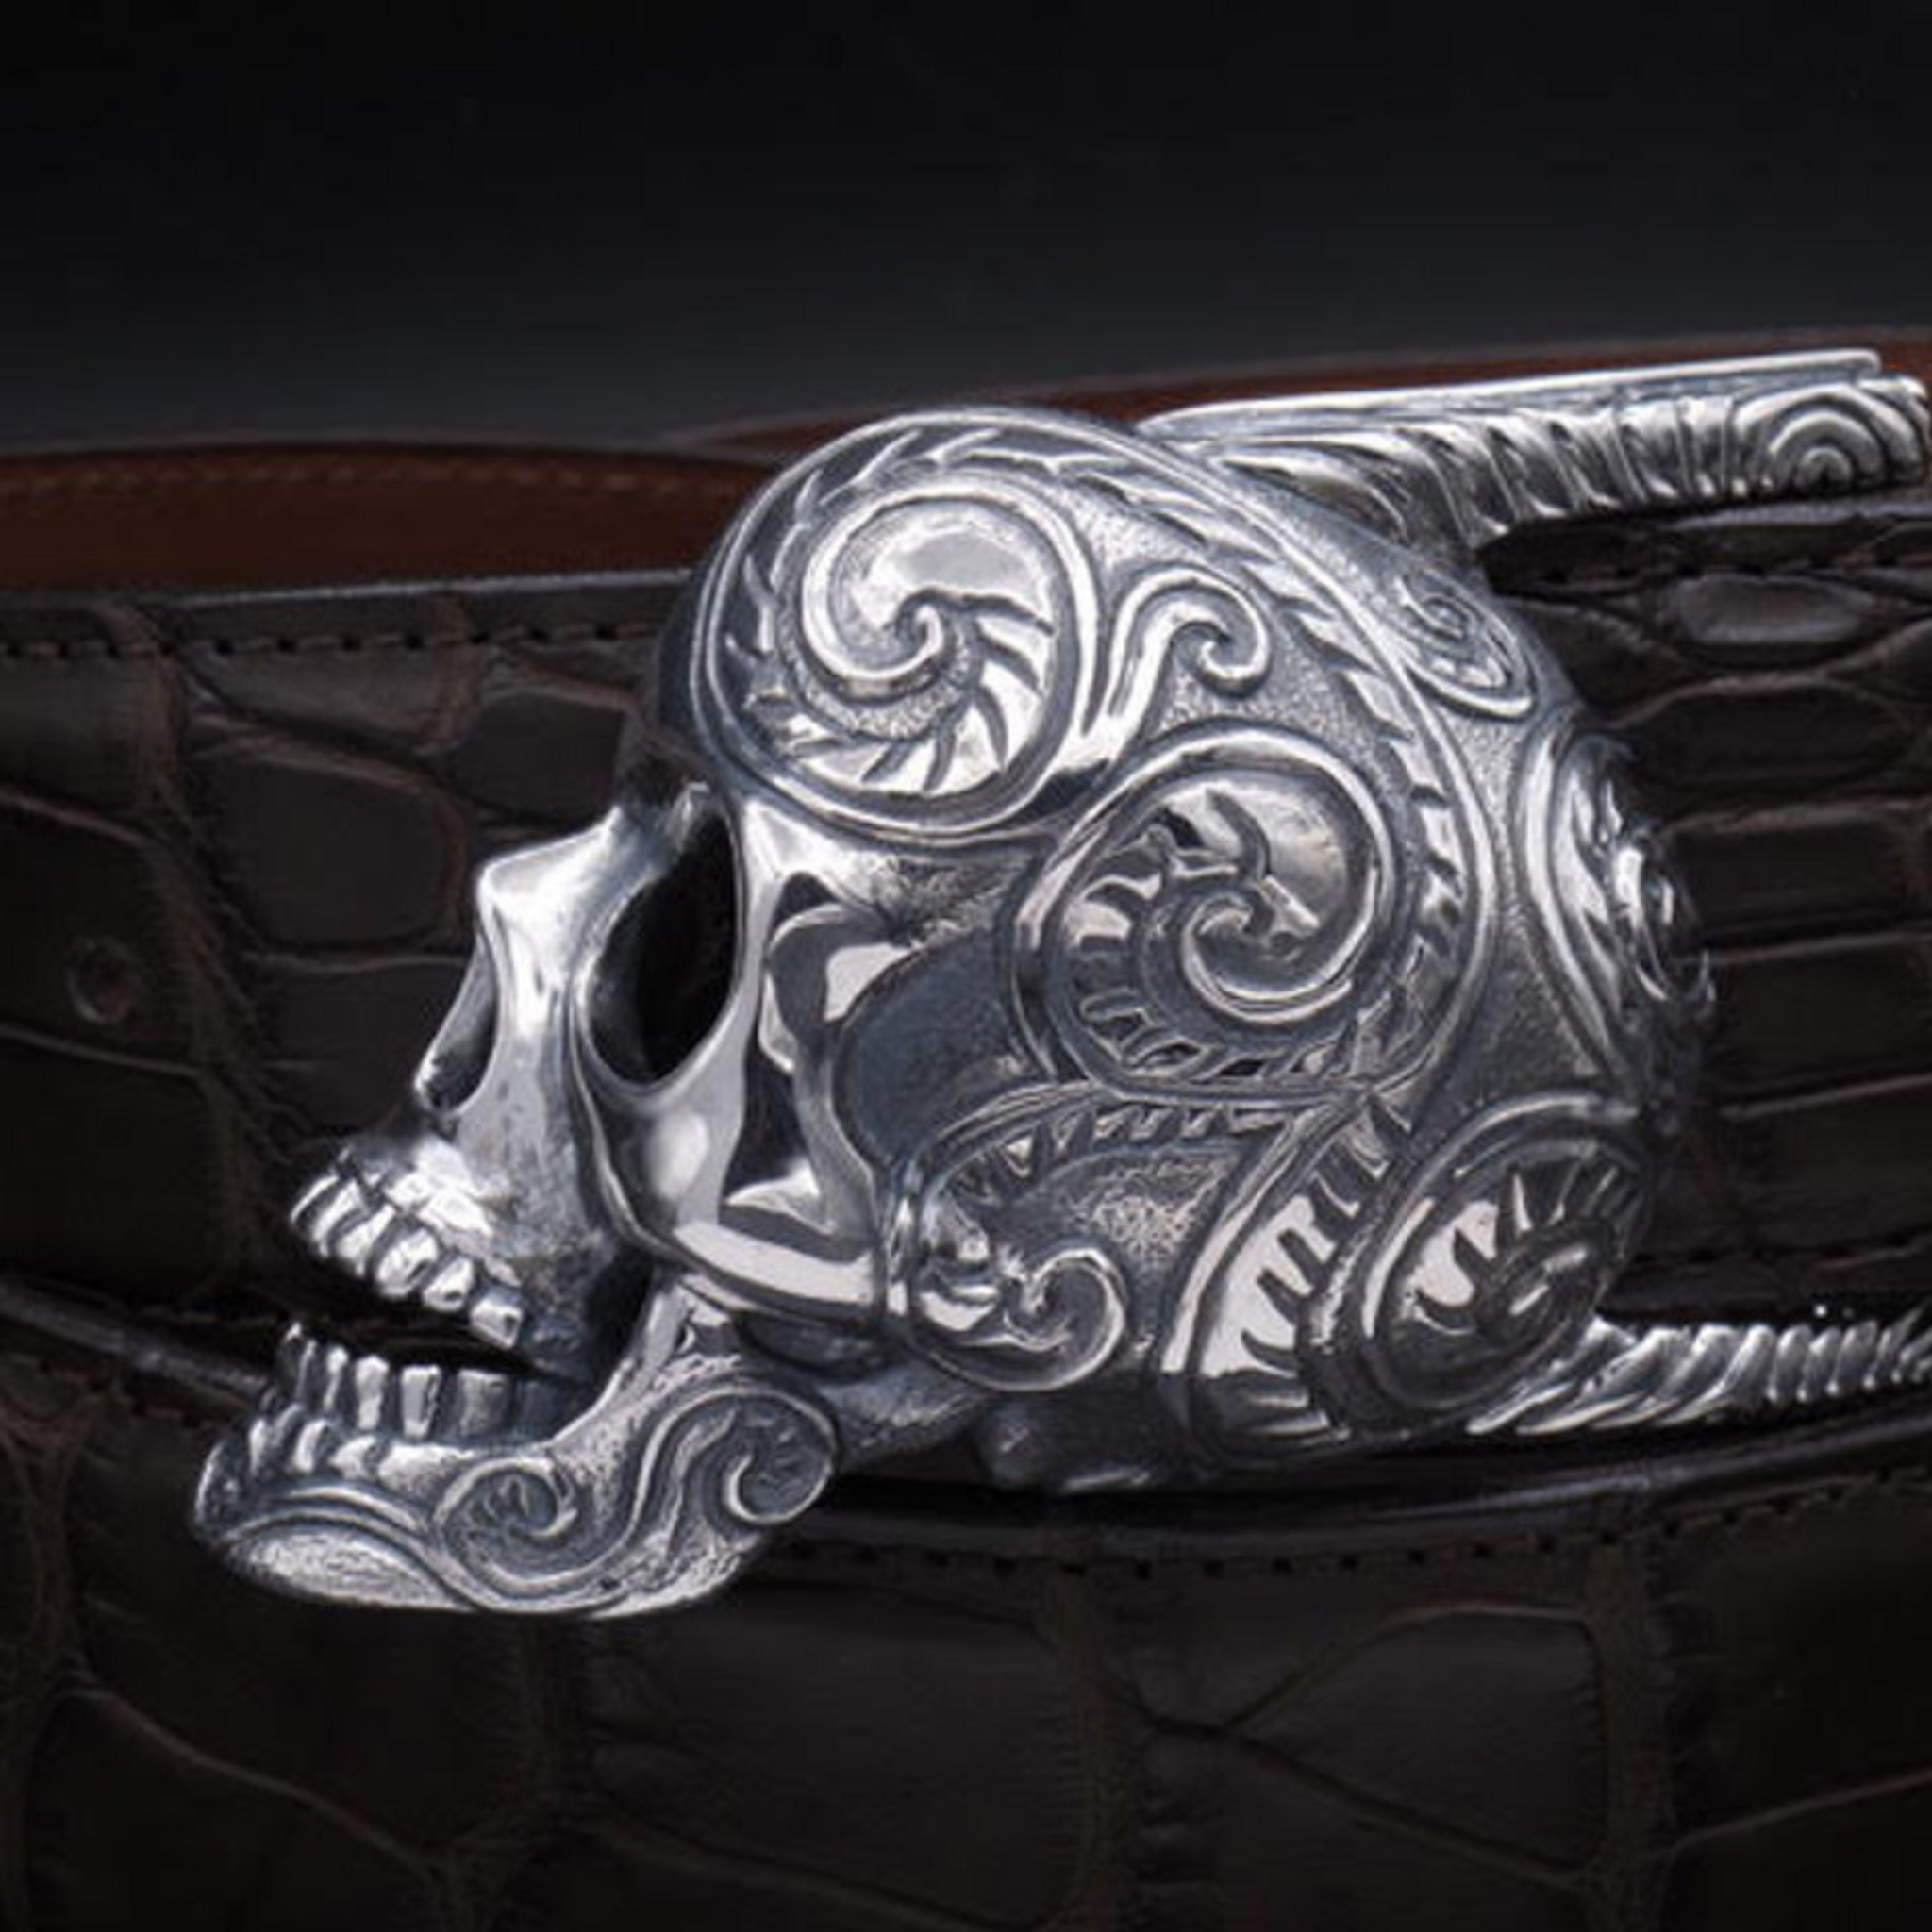 Sterling Silver Profile Skull Buckle - 1 1/2